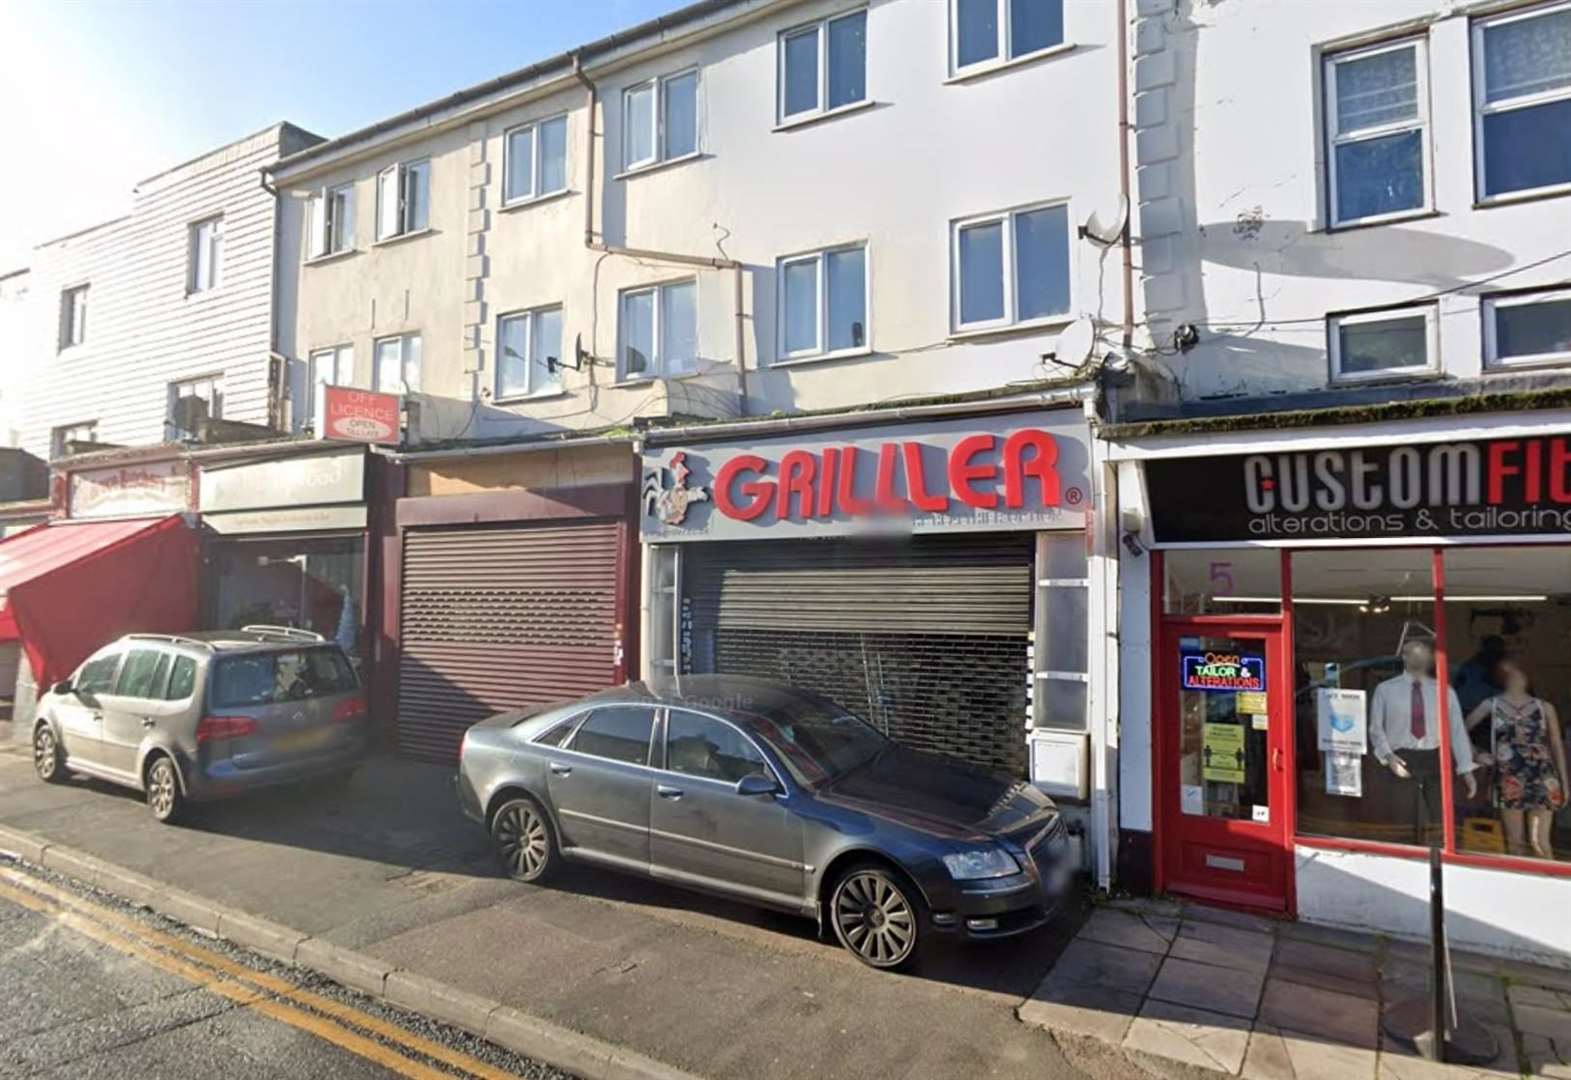 Police unhappy with chicken shop's booze bid